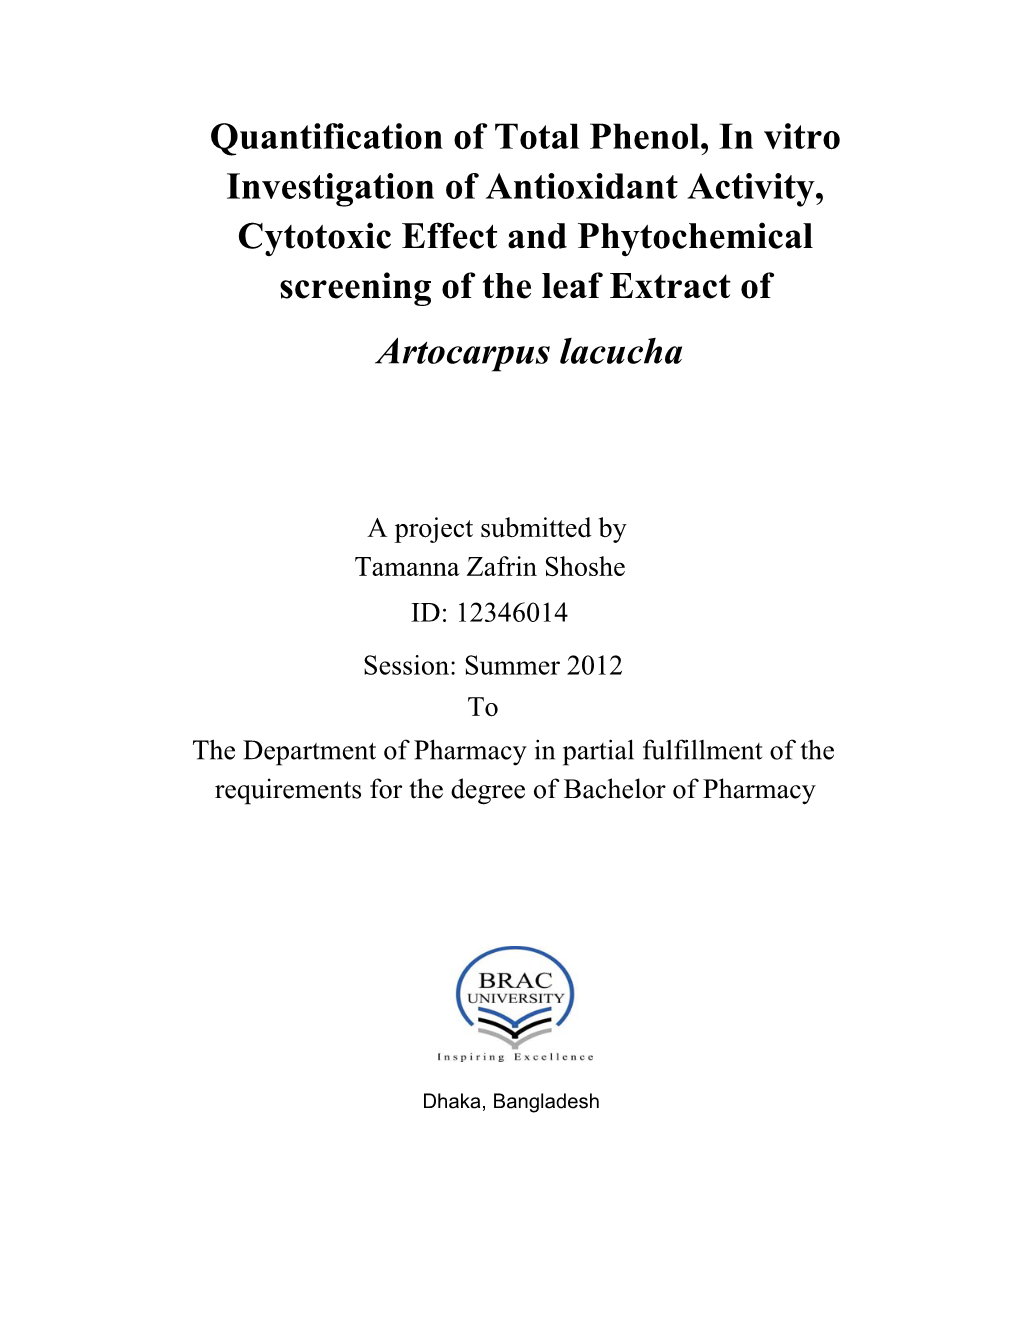 Quantification of Total Phenol, in Vitro Investigation of Antioxidant Activity